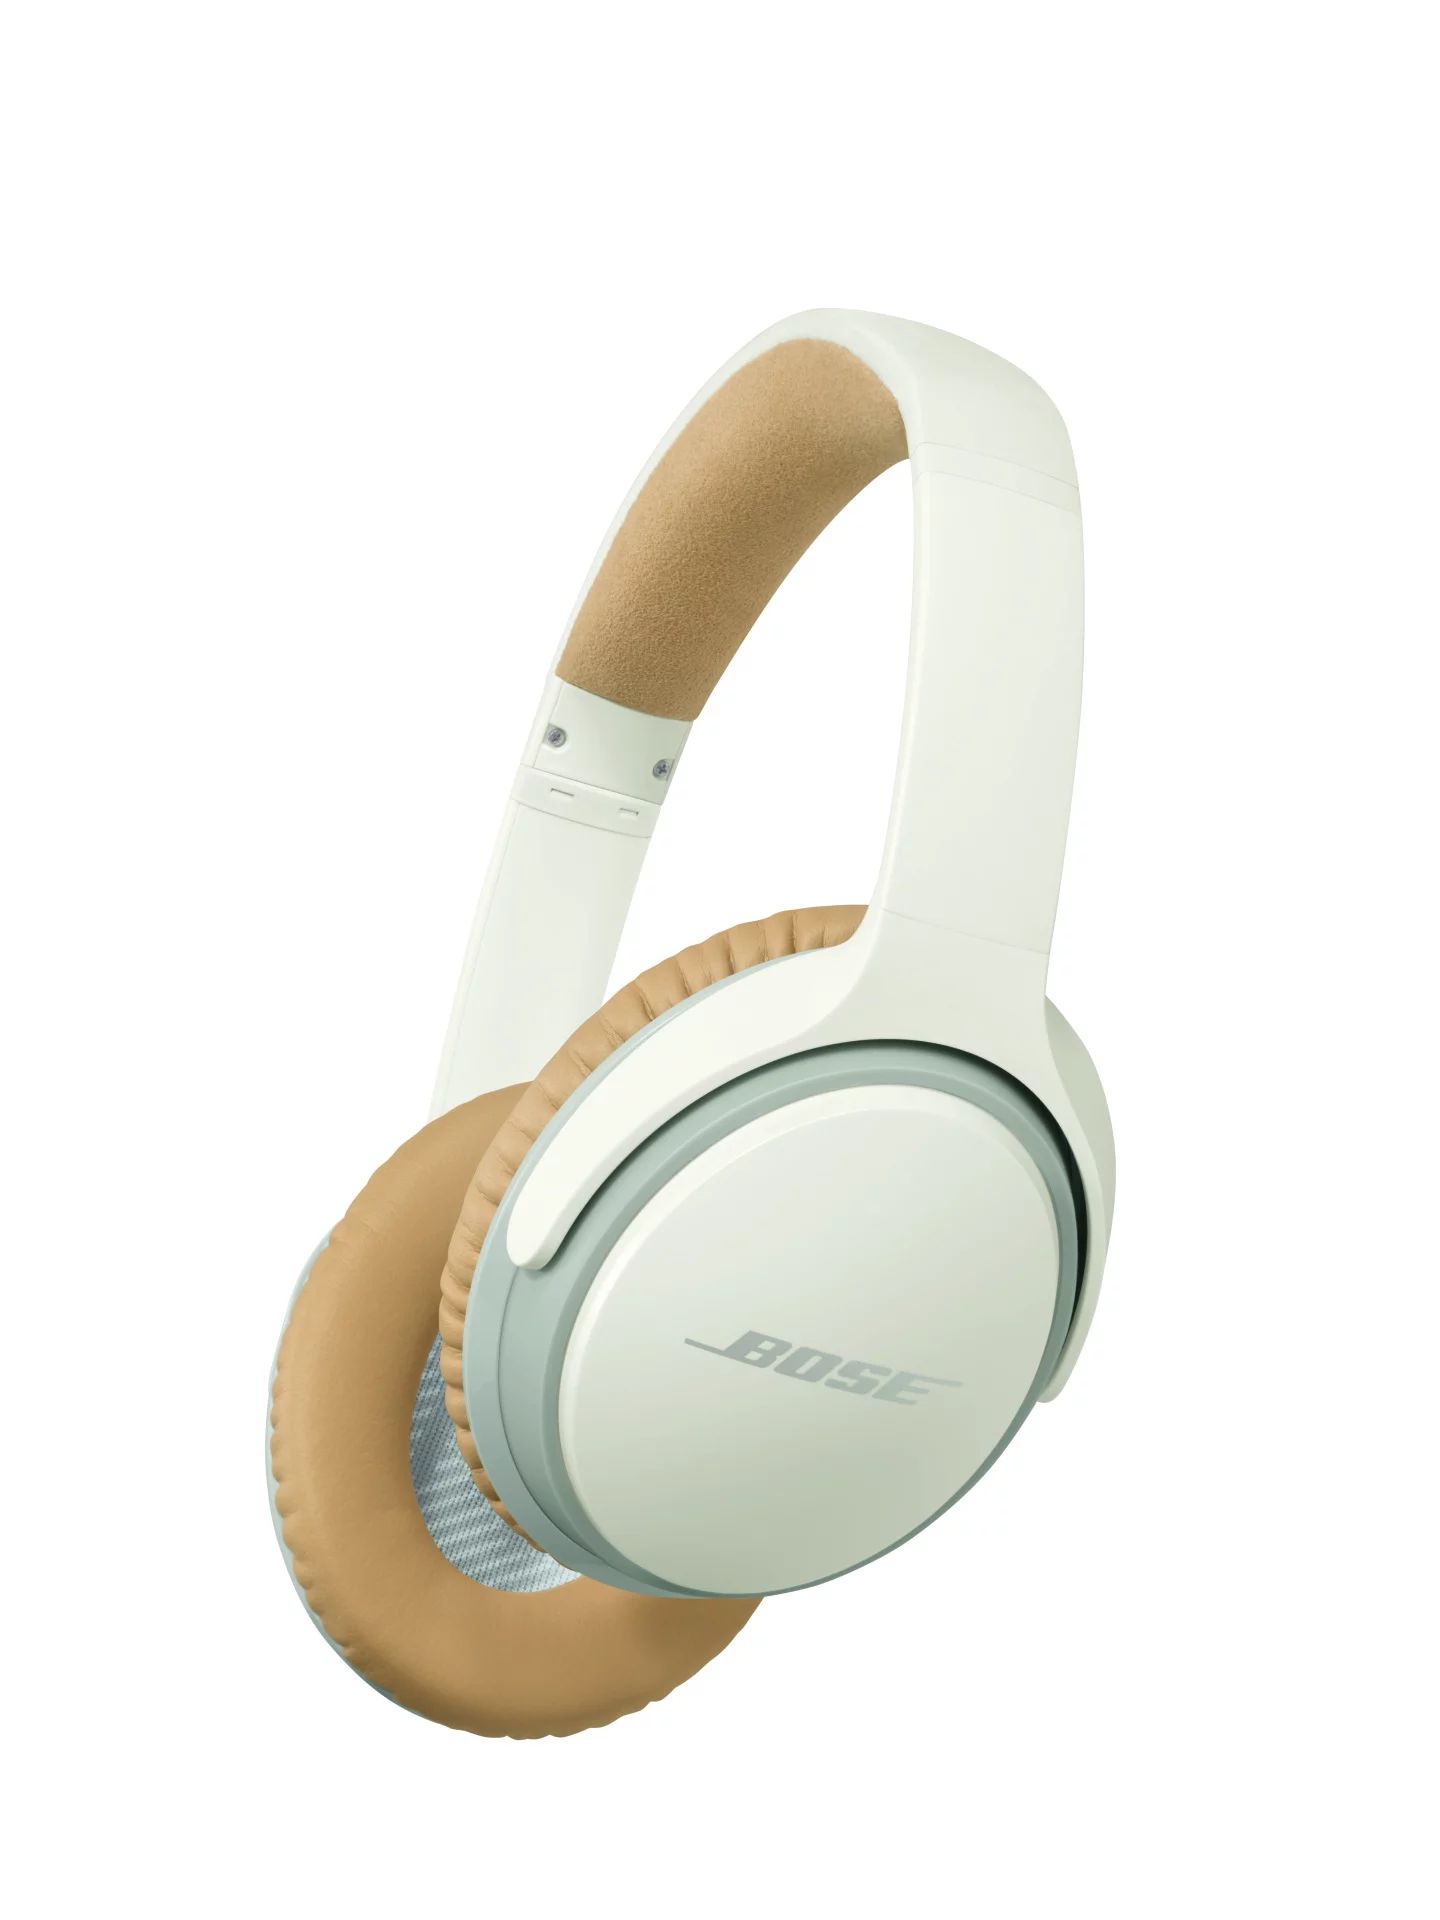 Bose SoundLink Around Ear Wireless Bluetooth Headphones II - White | Walmart (US)